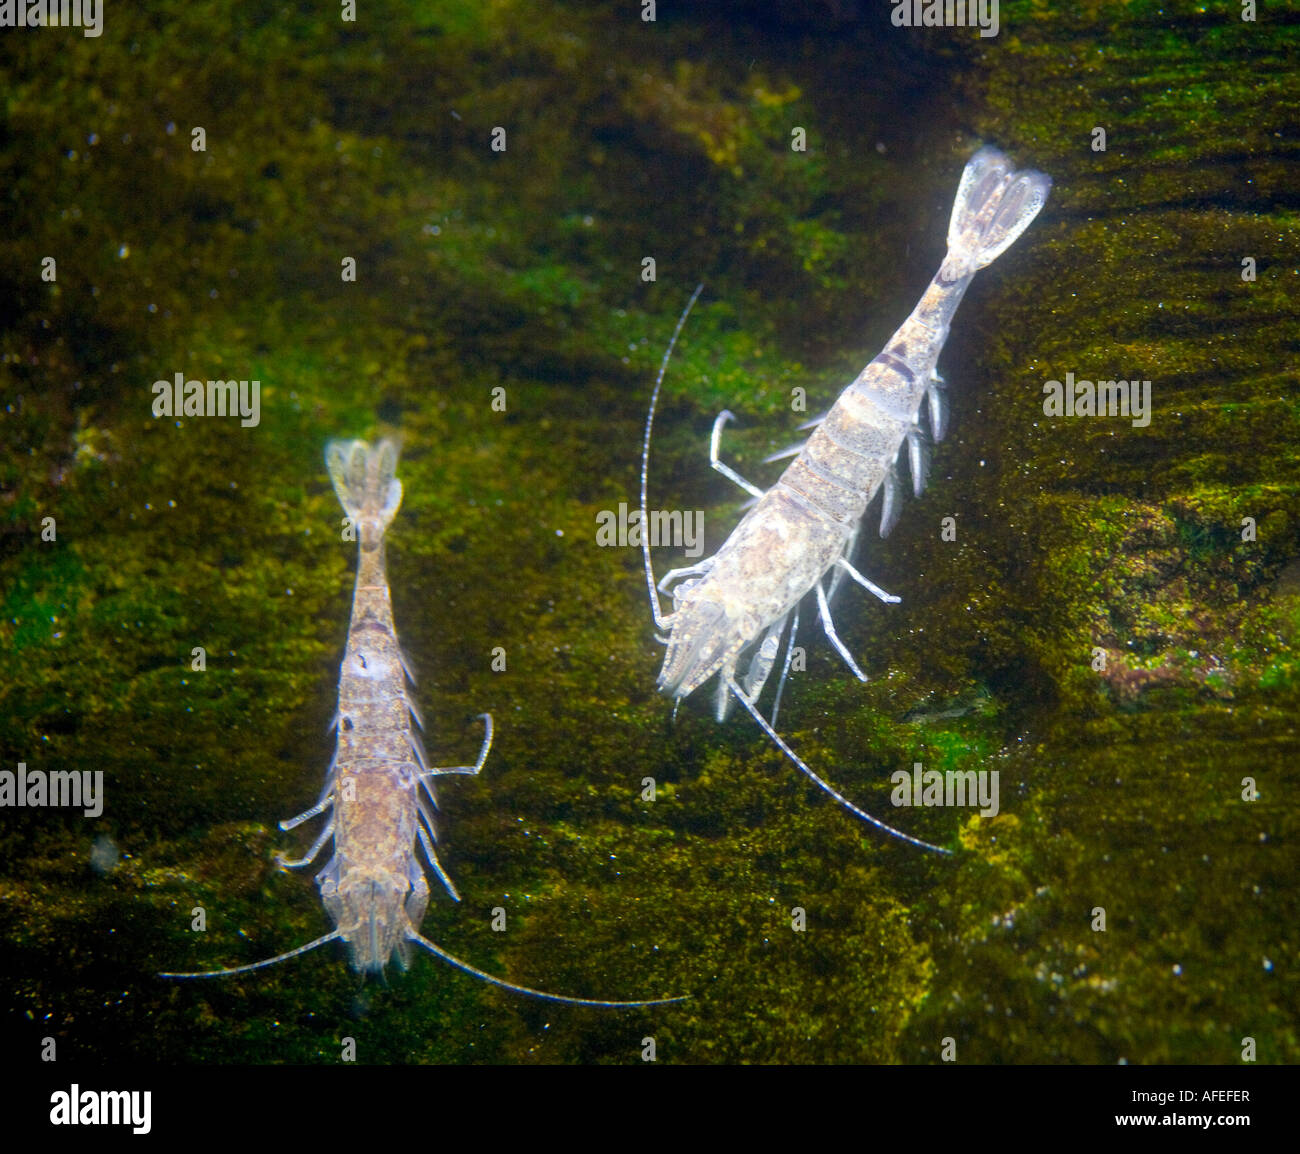 Shrimp Stock Photo